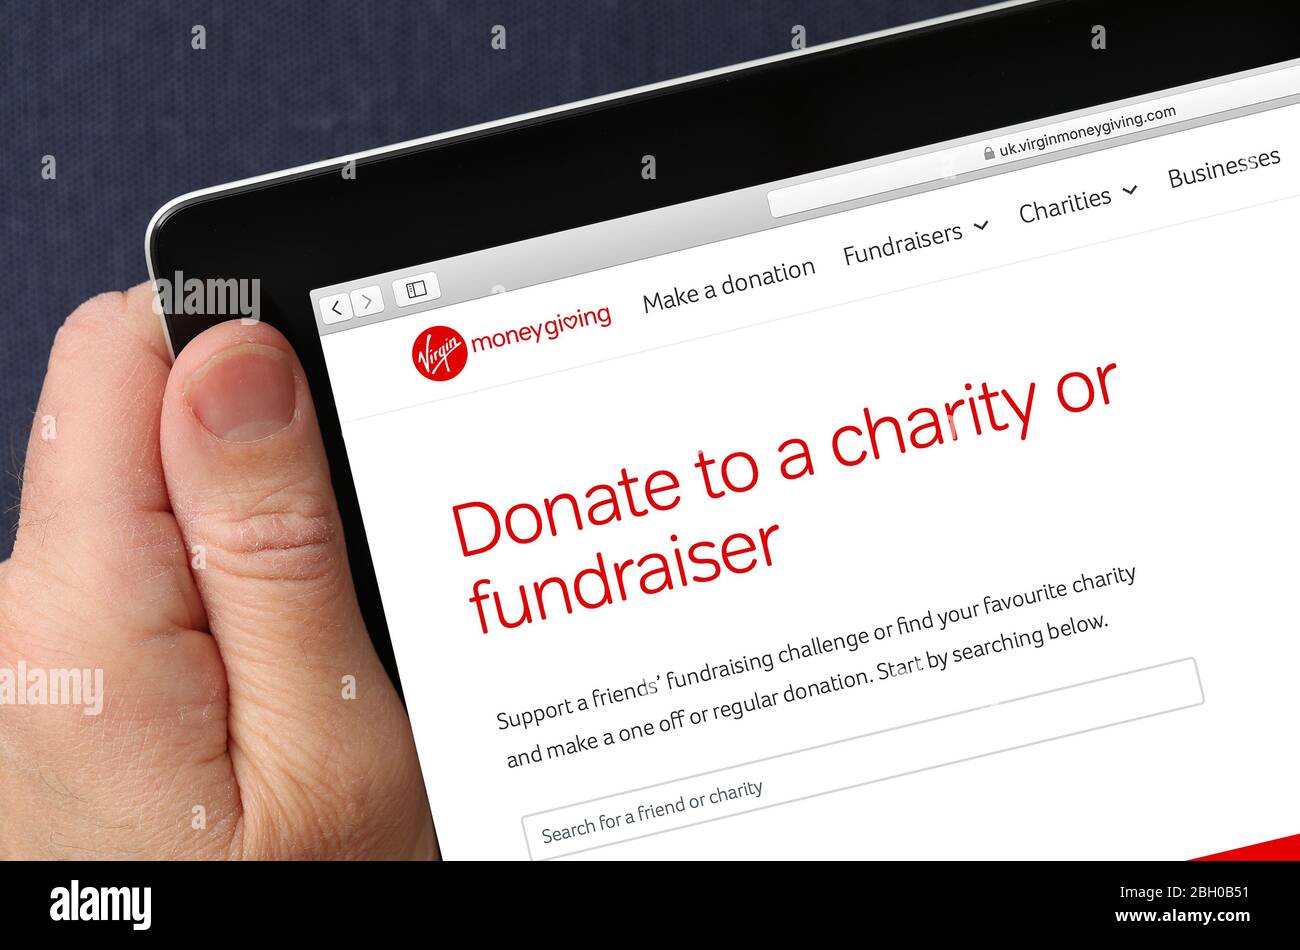 Virgin Money Giving fundraising website viewed on an iPad Stock Photo